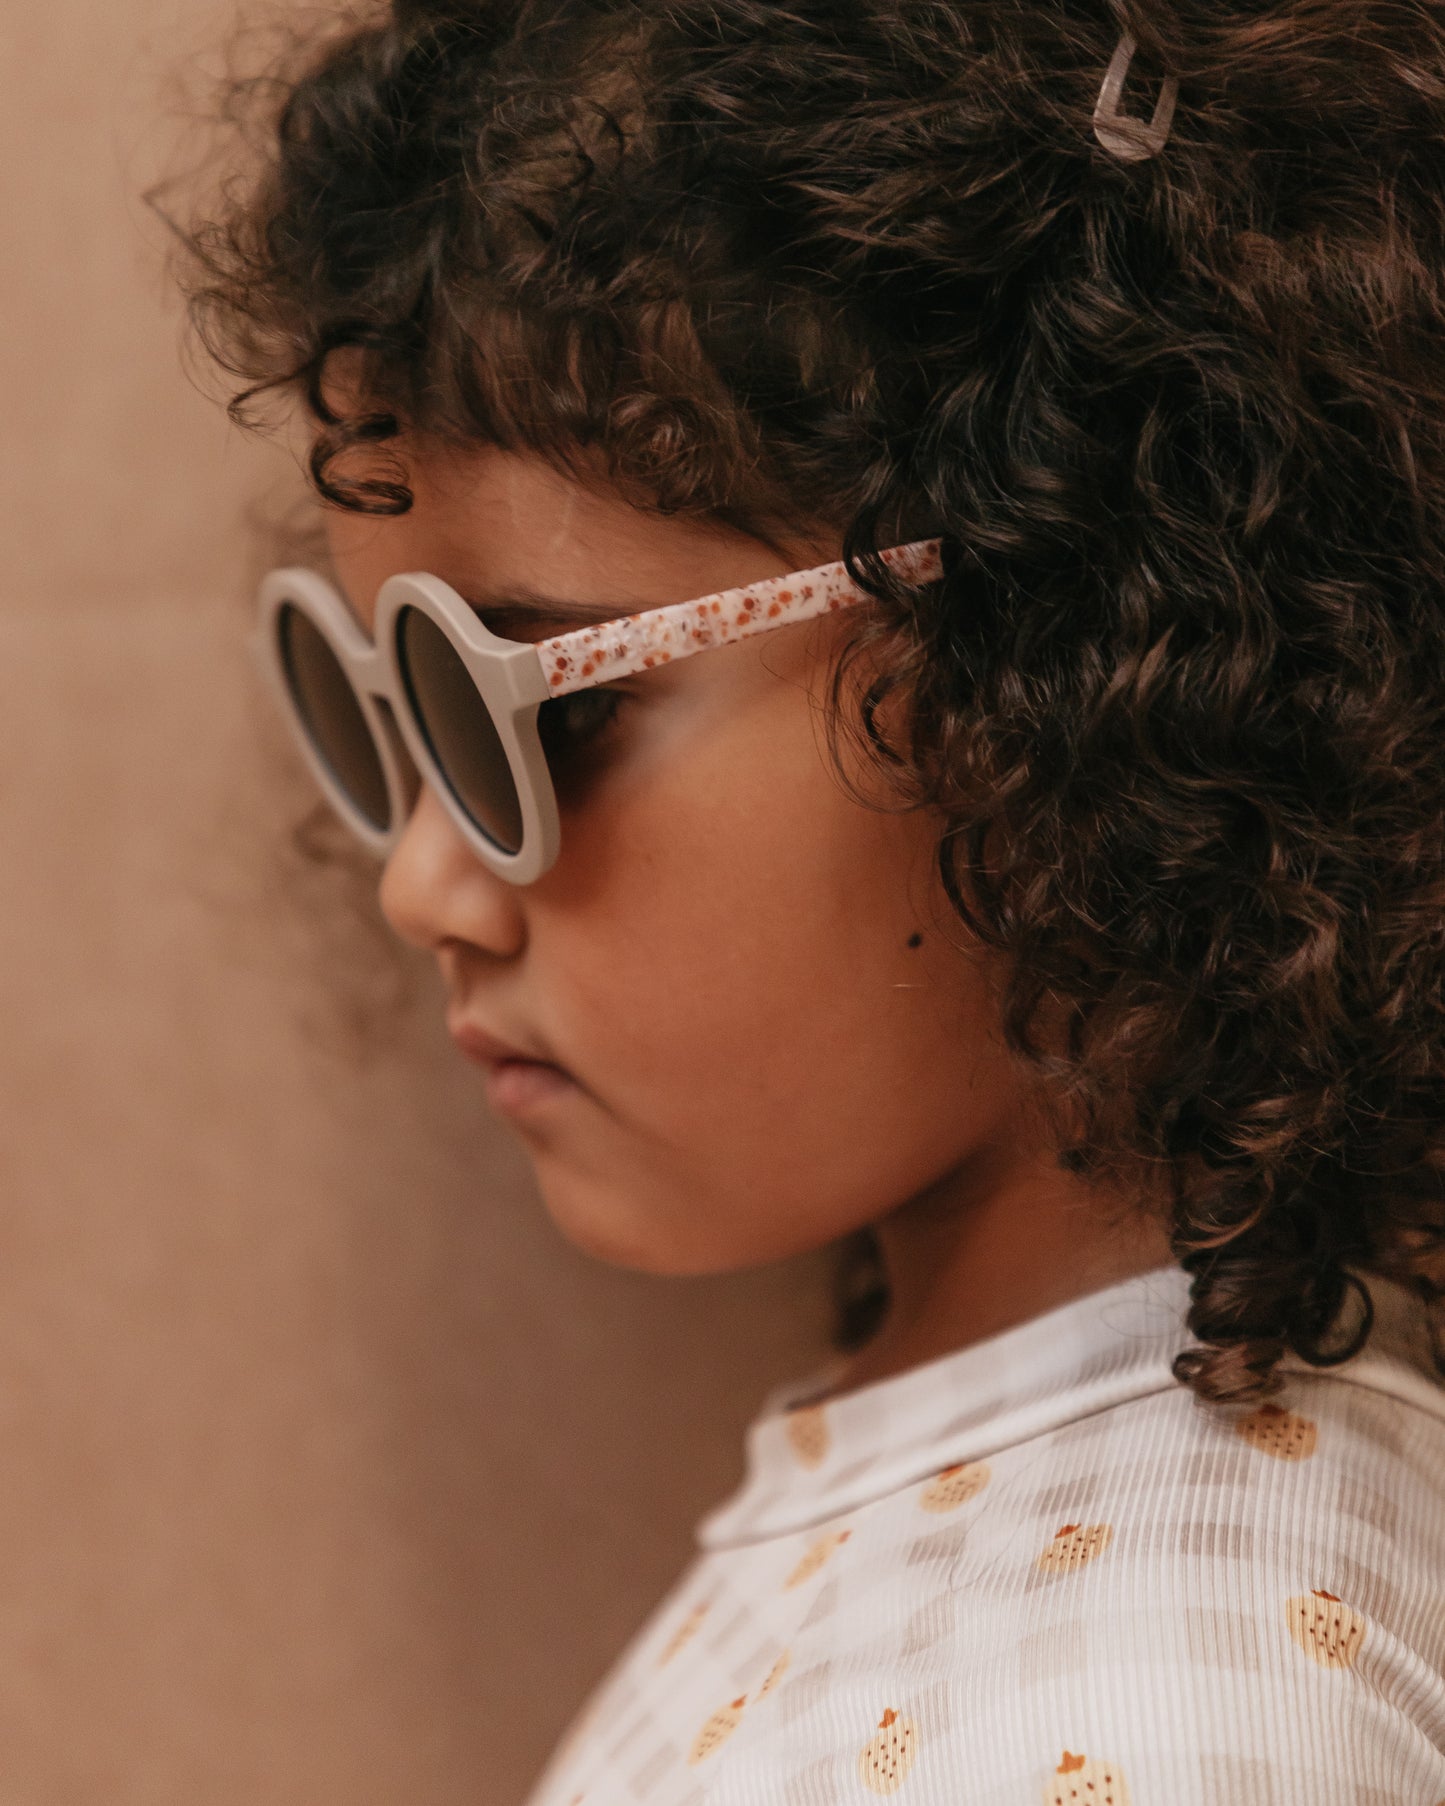 Óculos de Sol Silicone Criança - Little Garden